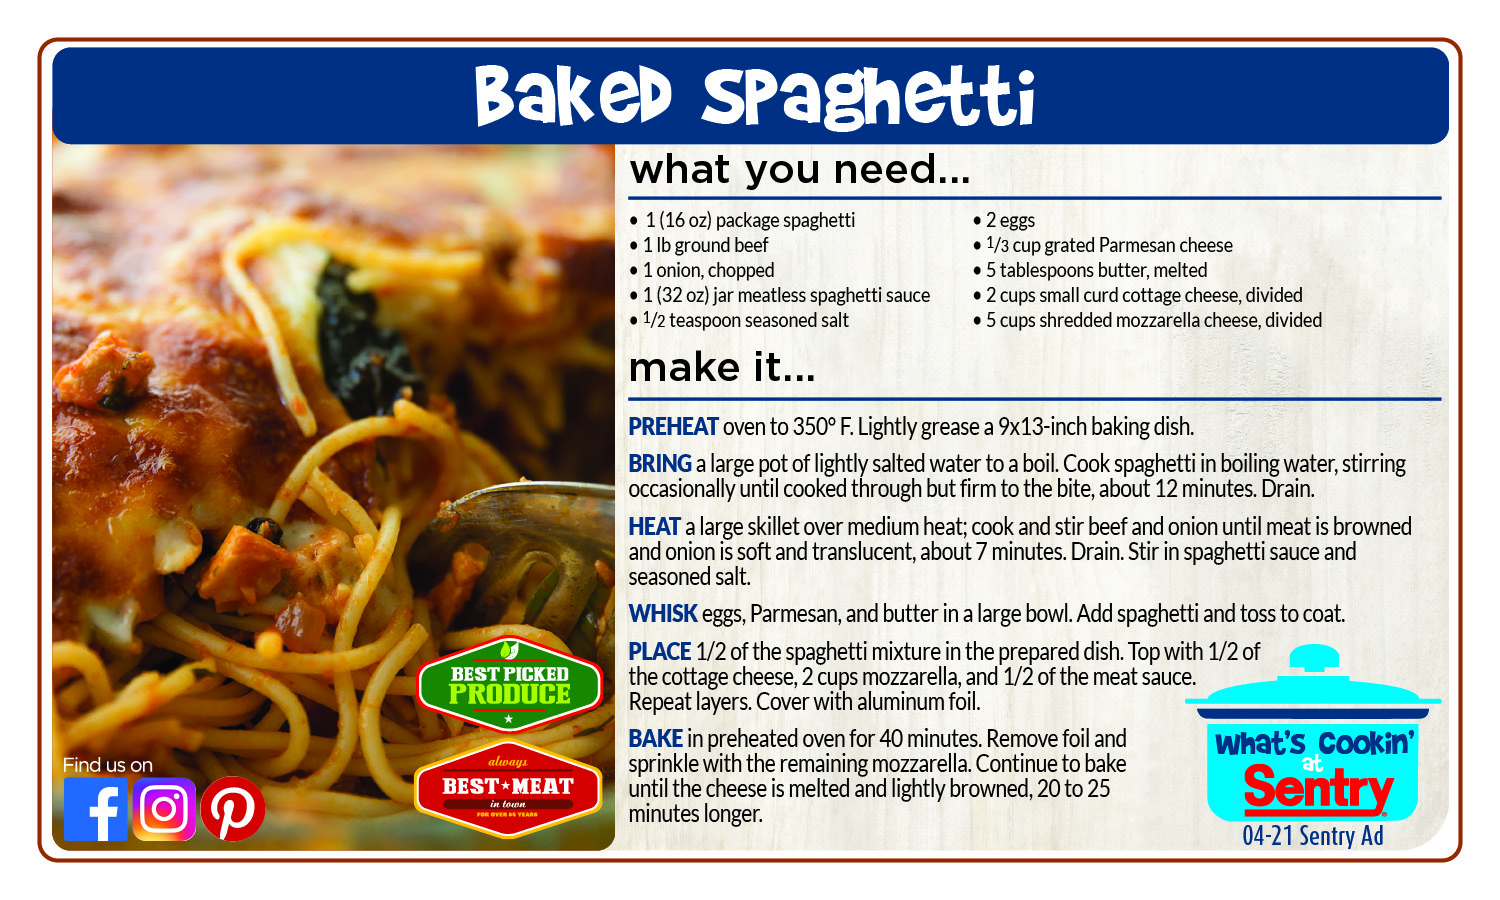 Recipe Card for Baked Spaghetti